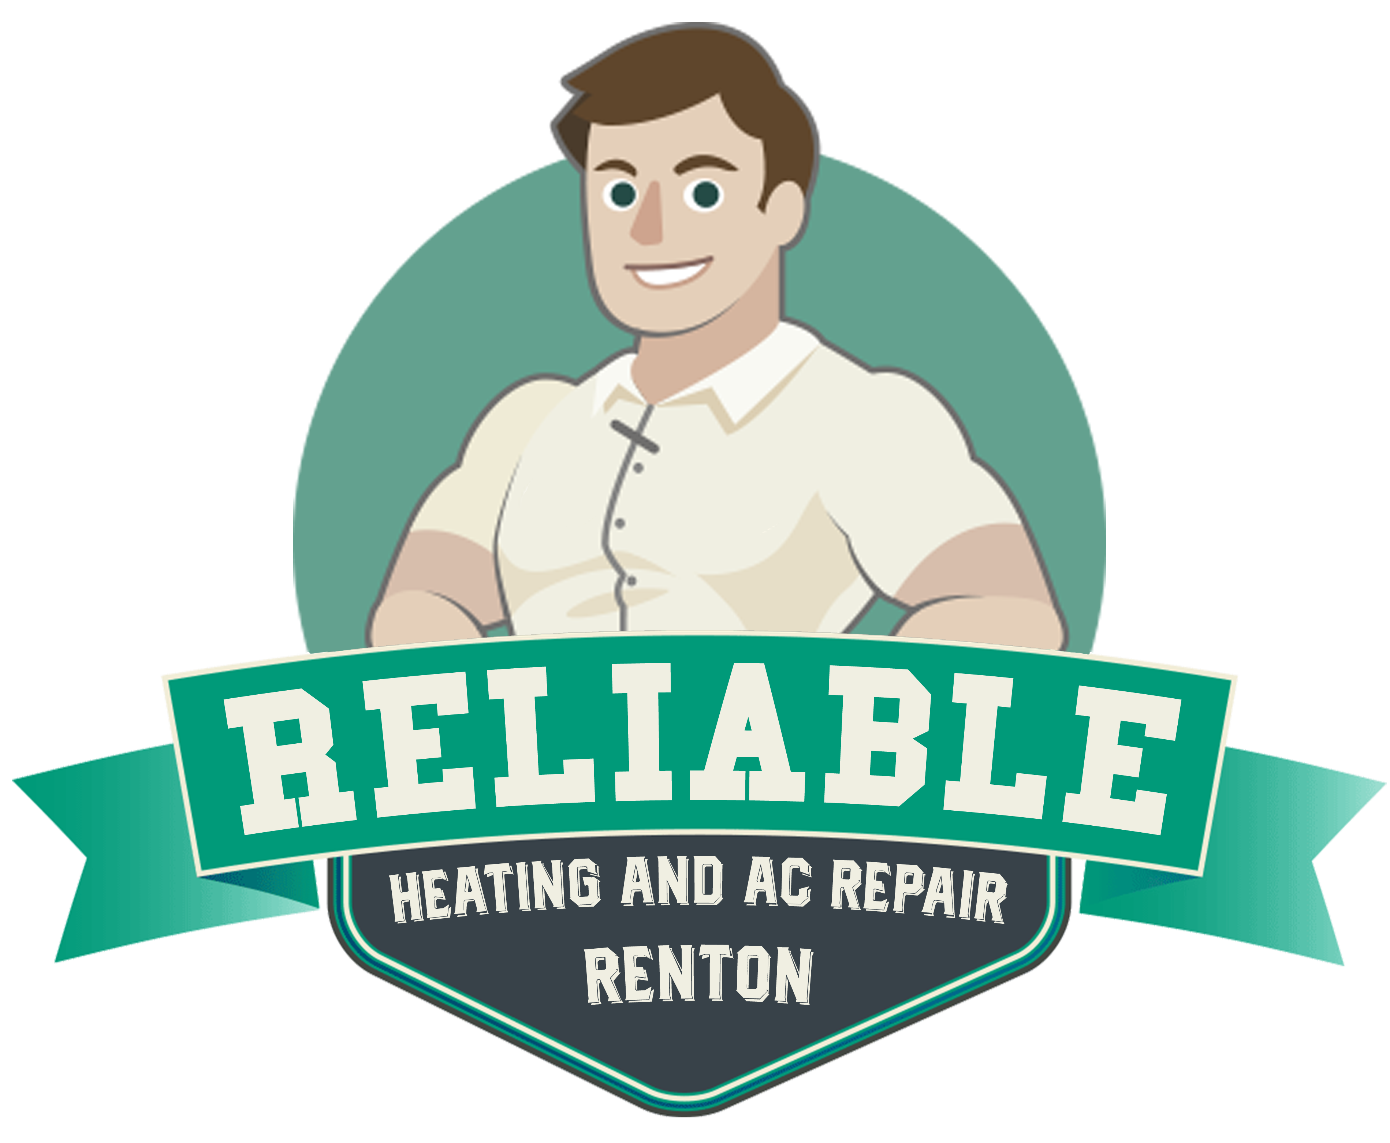 Reliable Heating And AC Repair Renton